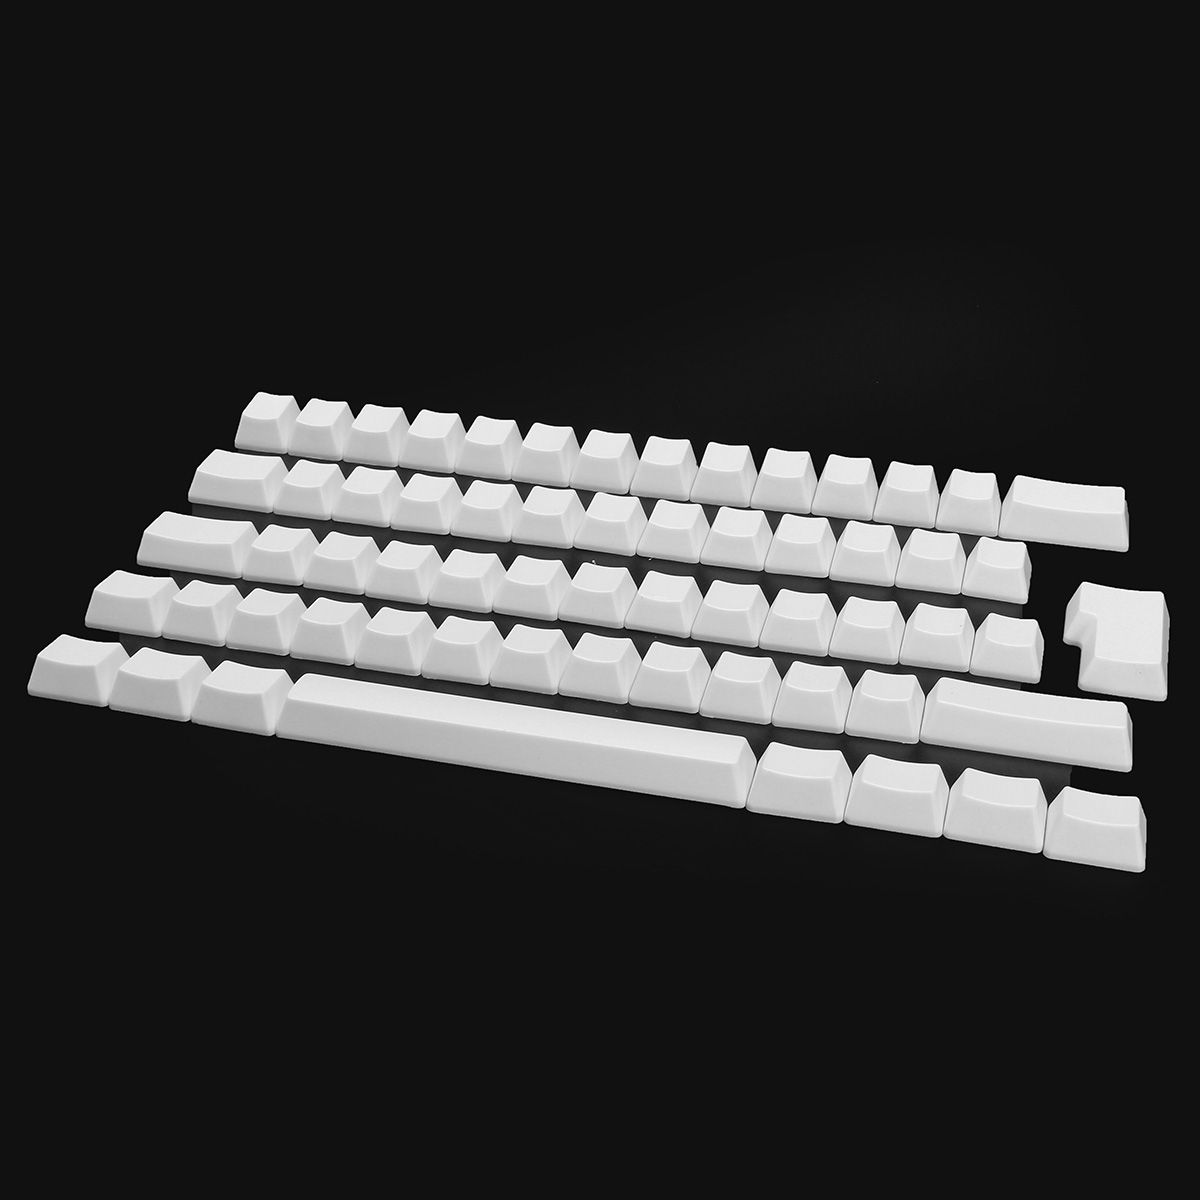 62-Keys-Blank-Keycap-Set-OEM-Profile-PBT-ISO-Keycaps-for-Mechanical-Keyboard-1747785